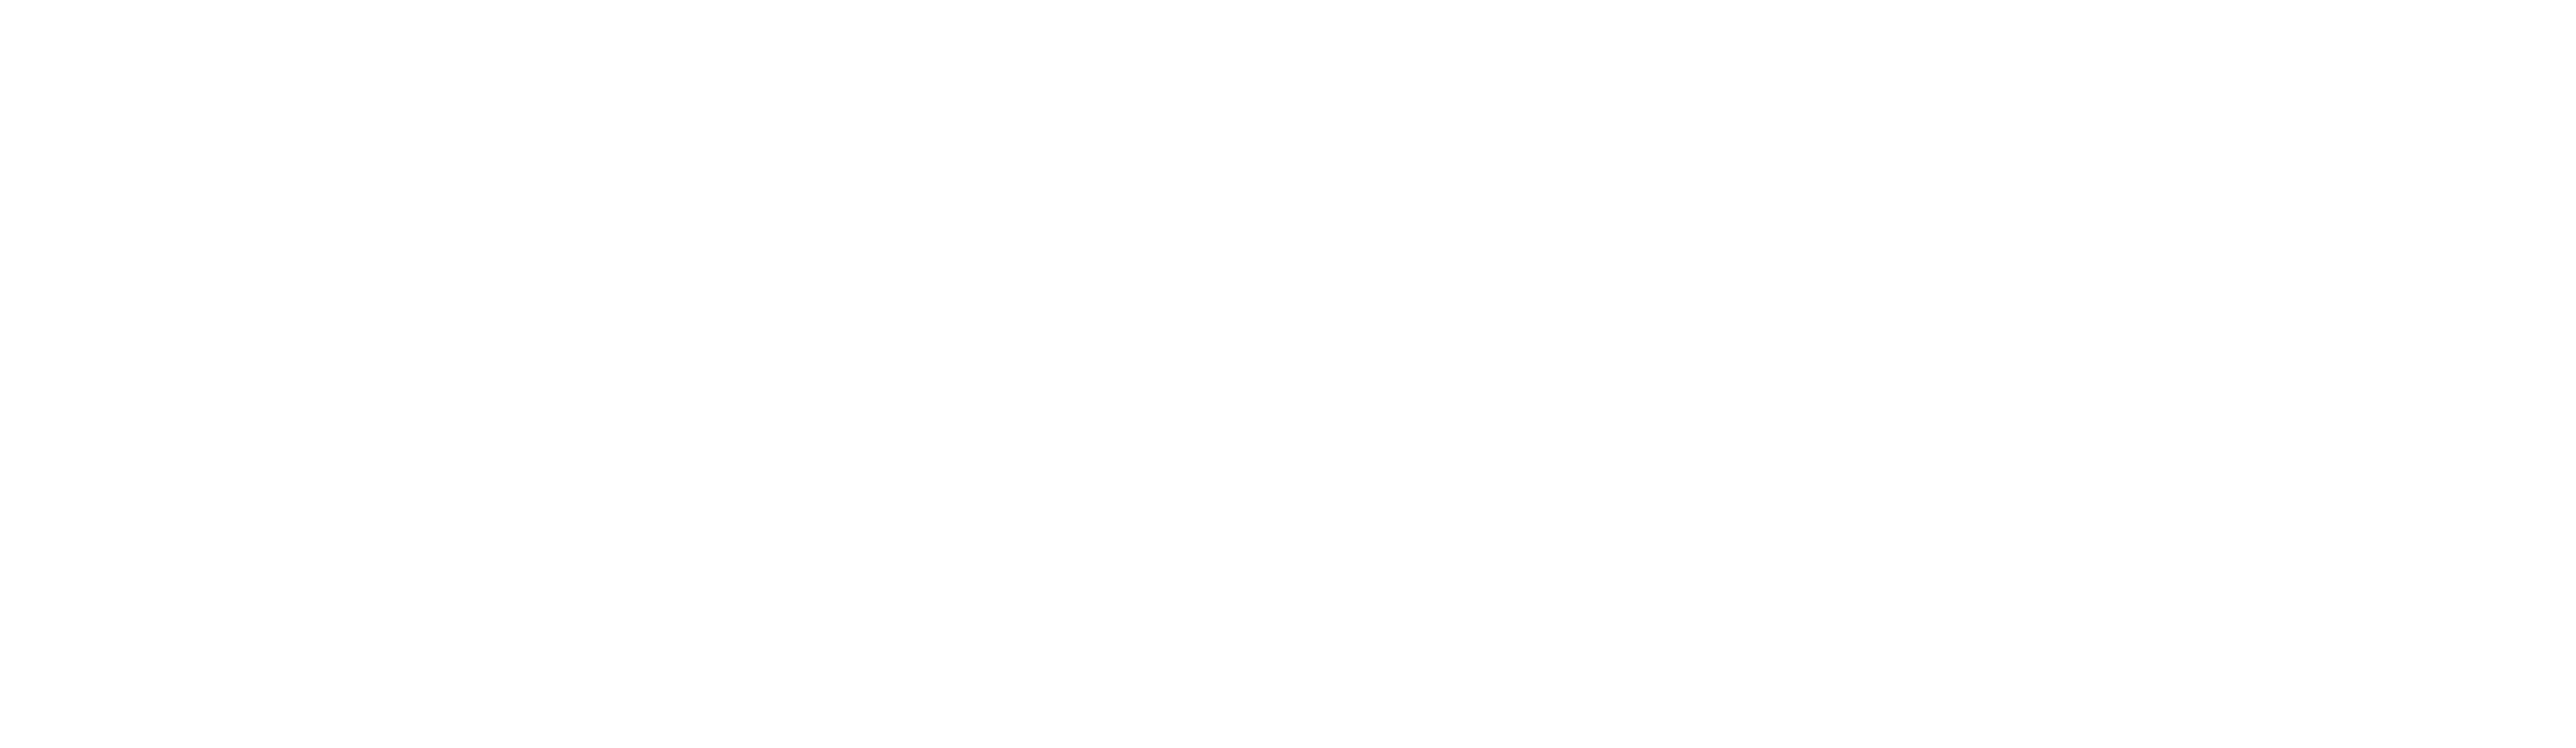 Men's U19 World Championship 2021